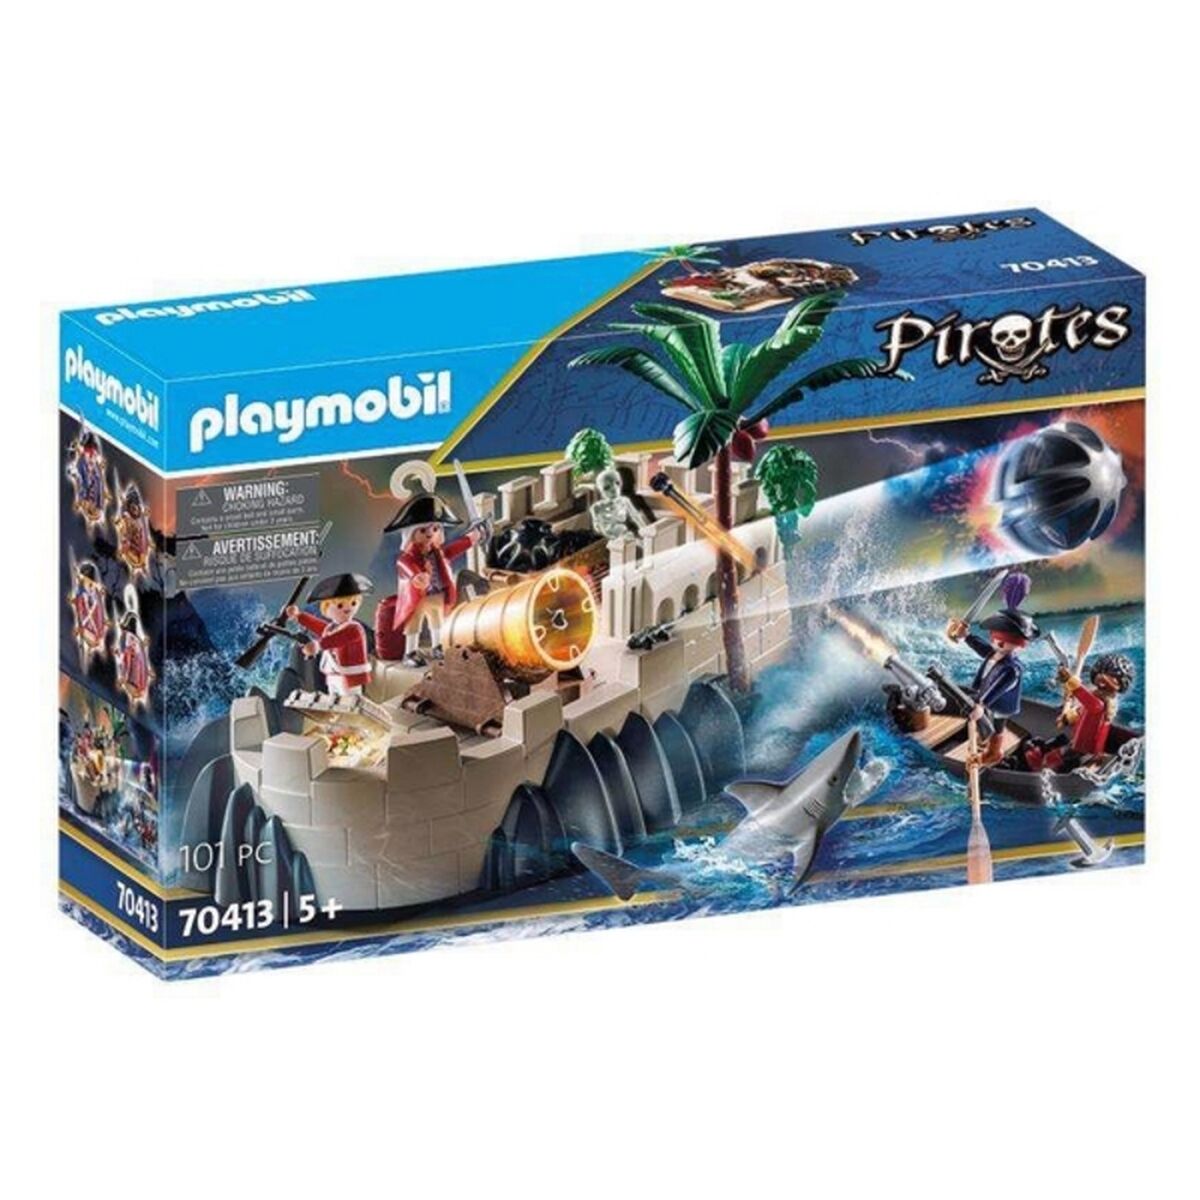 Playset Pirate Bastion Playmobil 70413 (101 pcs) Pirates